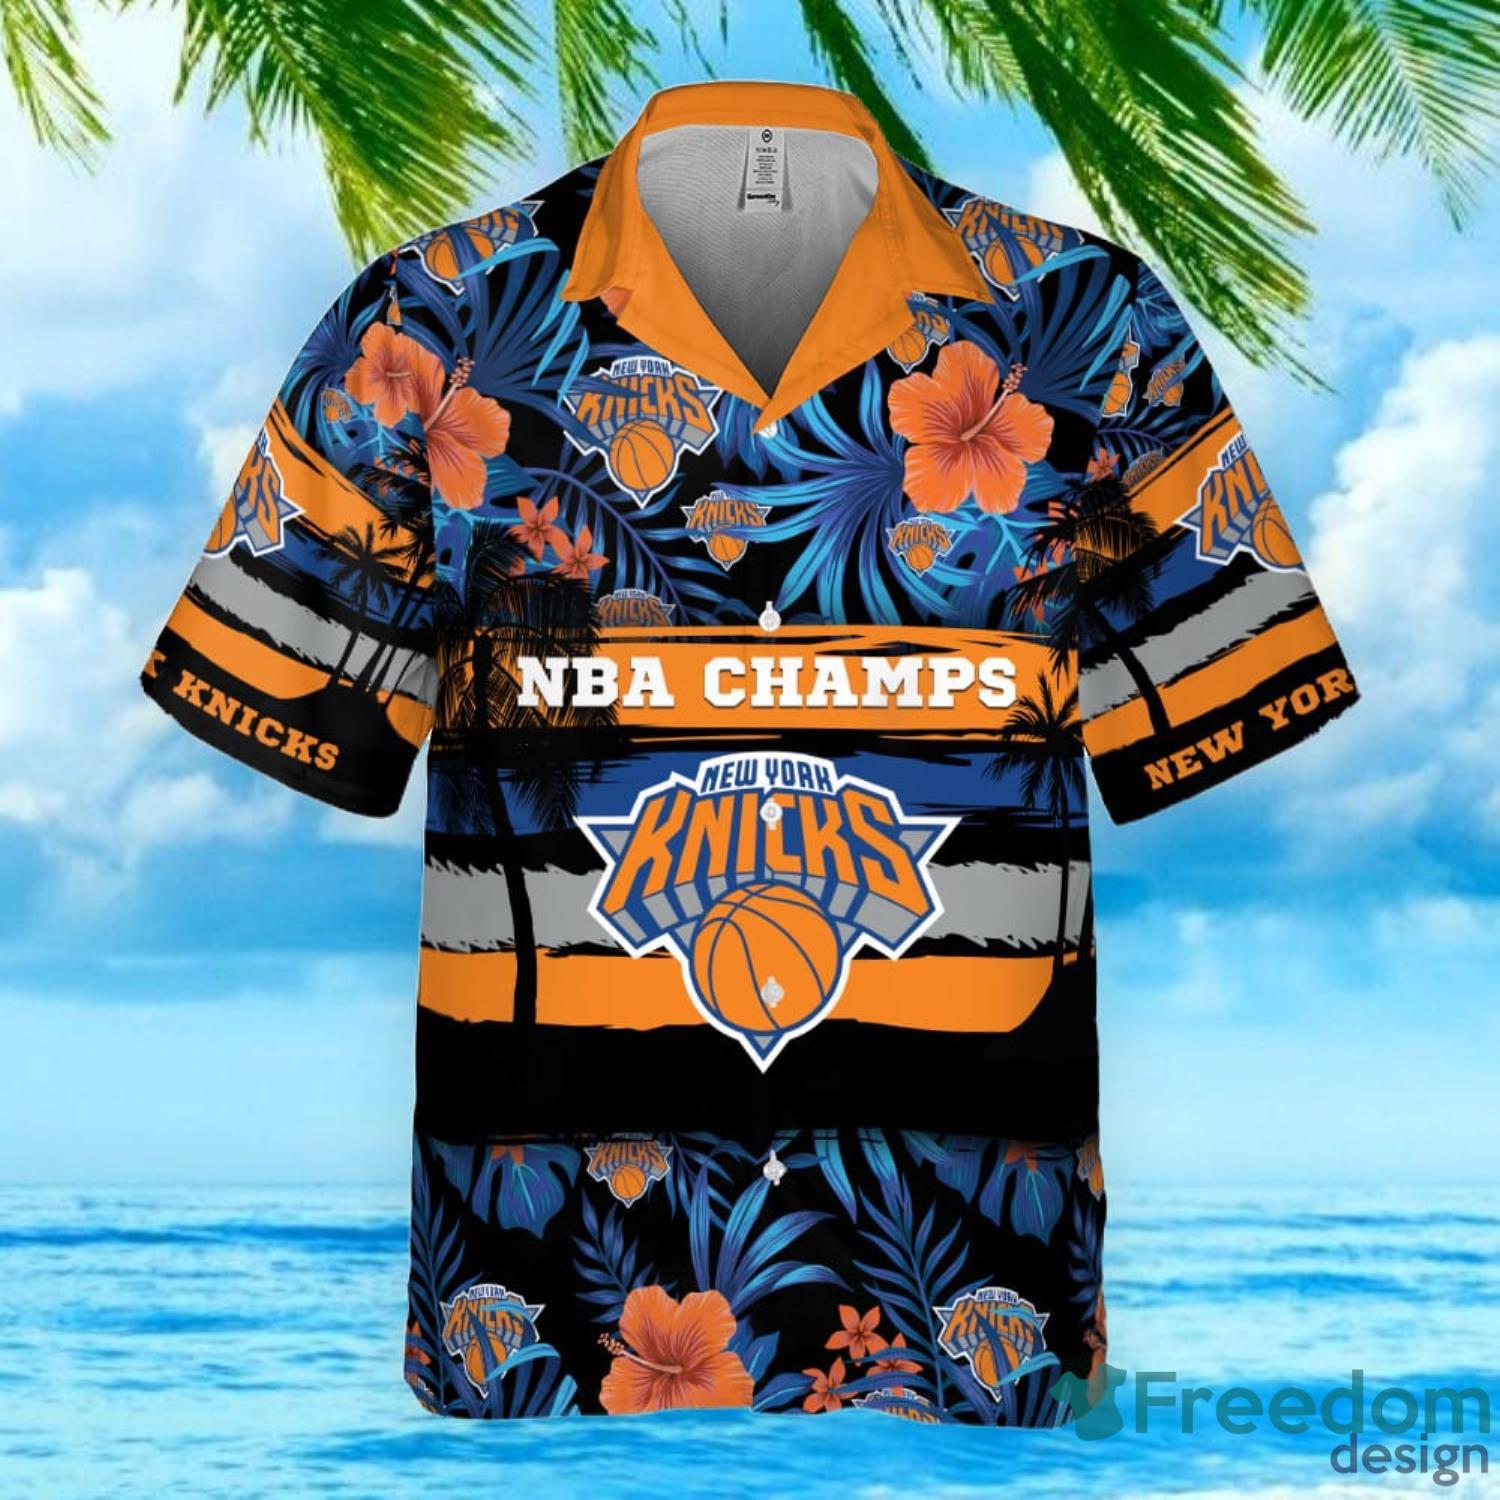 Tropical Style New York Knicks National Basketball Association